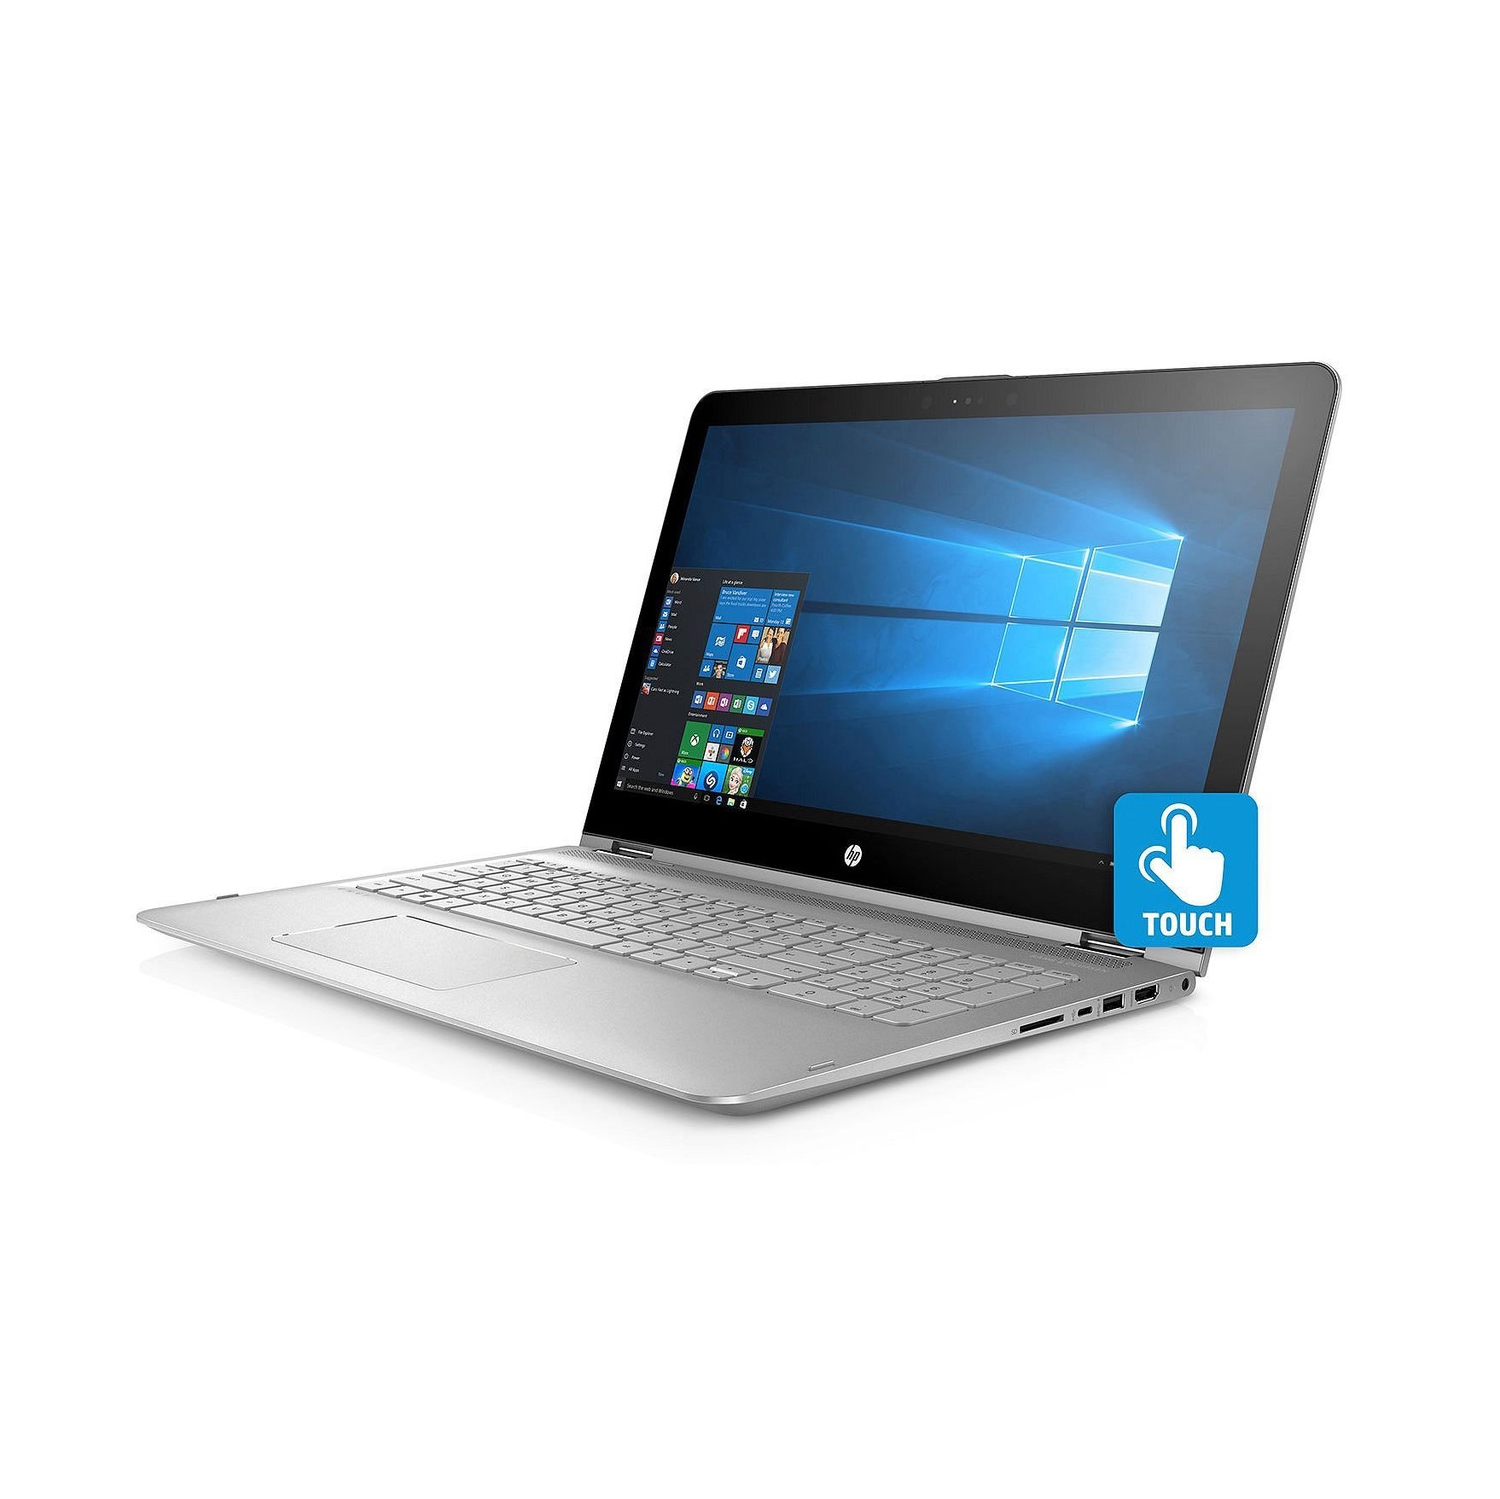 HP ENVY X360 15T-AQ200 15.6" FHD 1920 x 1080p Laptop, Core i7 8th Gen, 8Gb RAM, 256Gb SSD, Windows 10 (Refurbished)